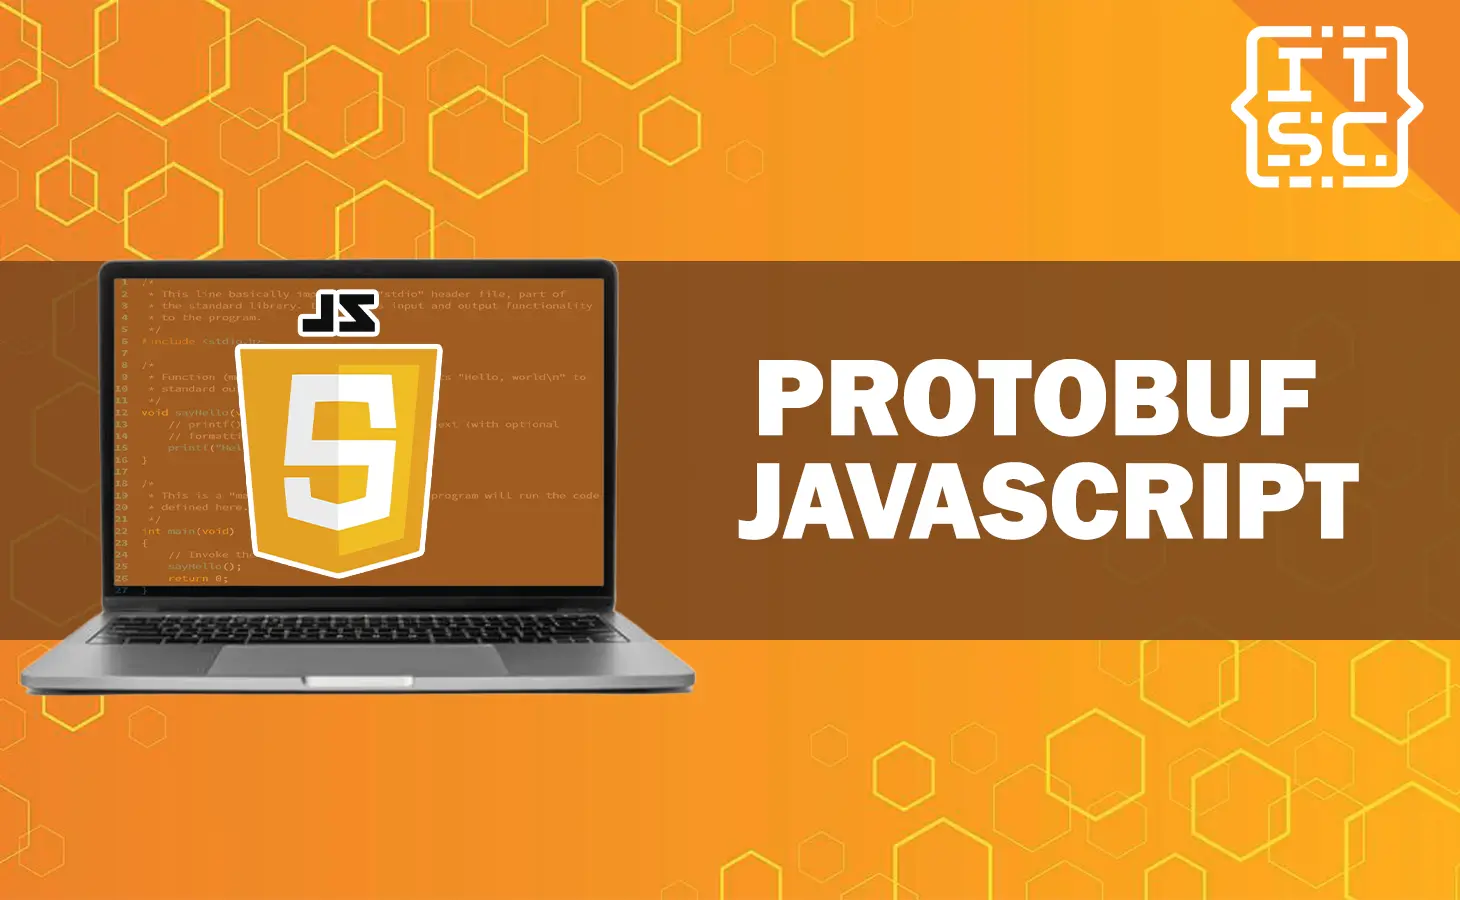 Protobuf JavaScript